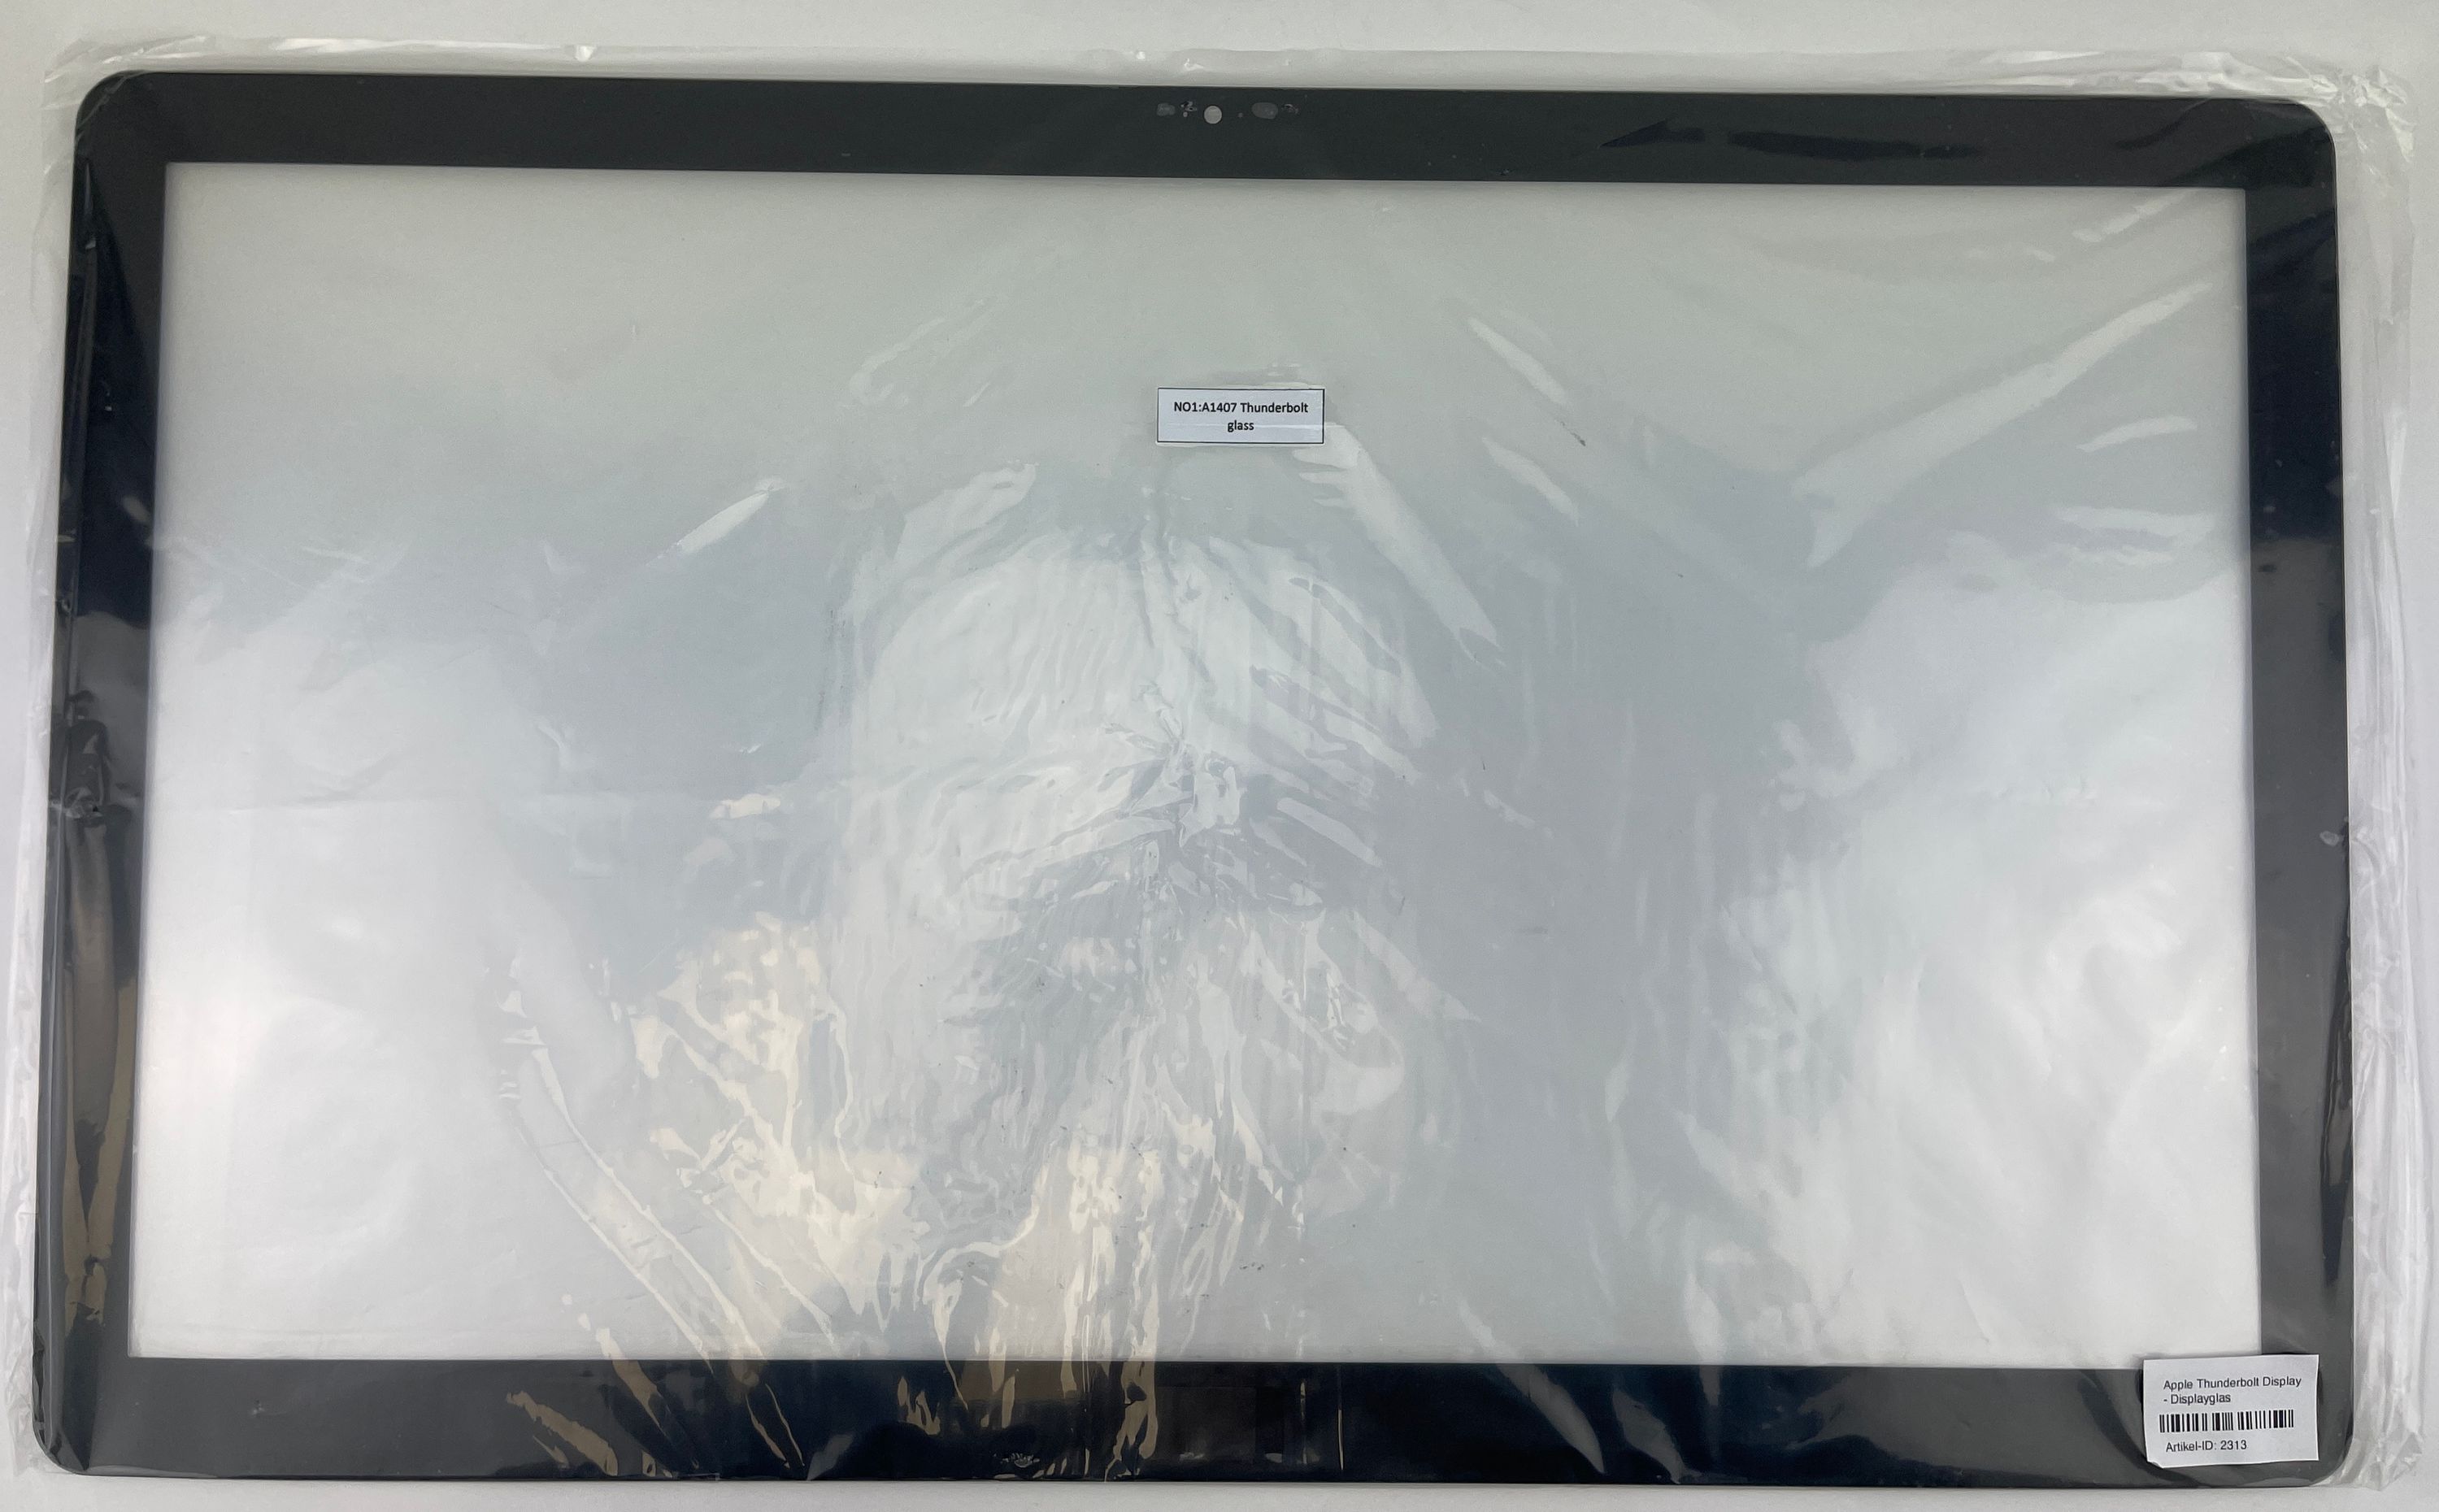 Display Scheibe für Apple Thunderbolt 27" A1407 & Apple Cinema 27" A1316 Displays